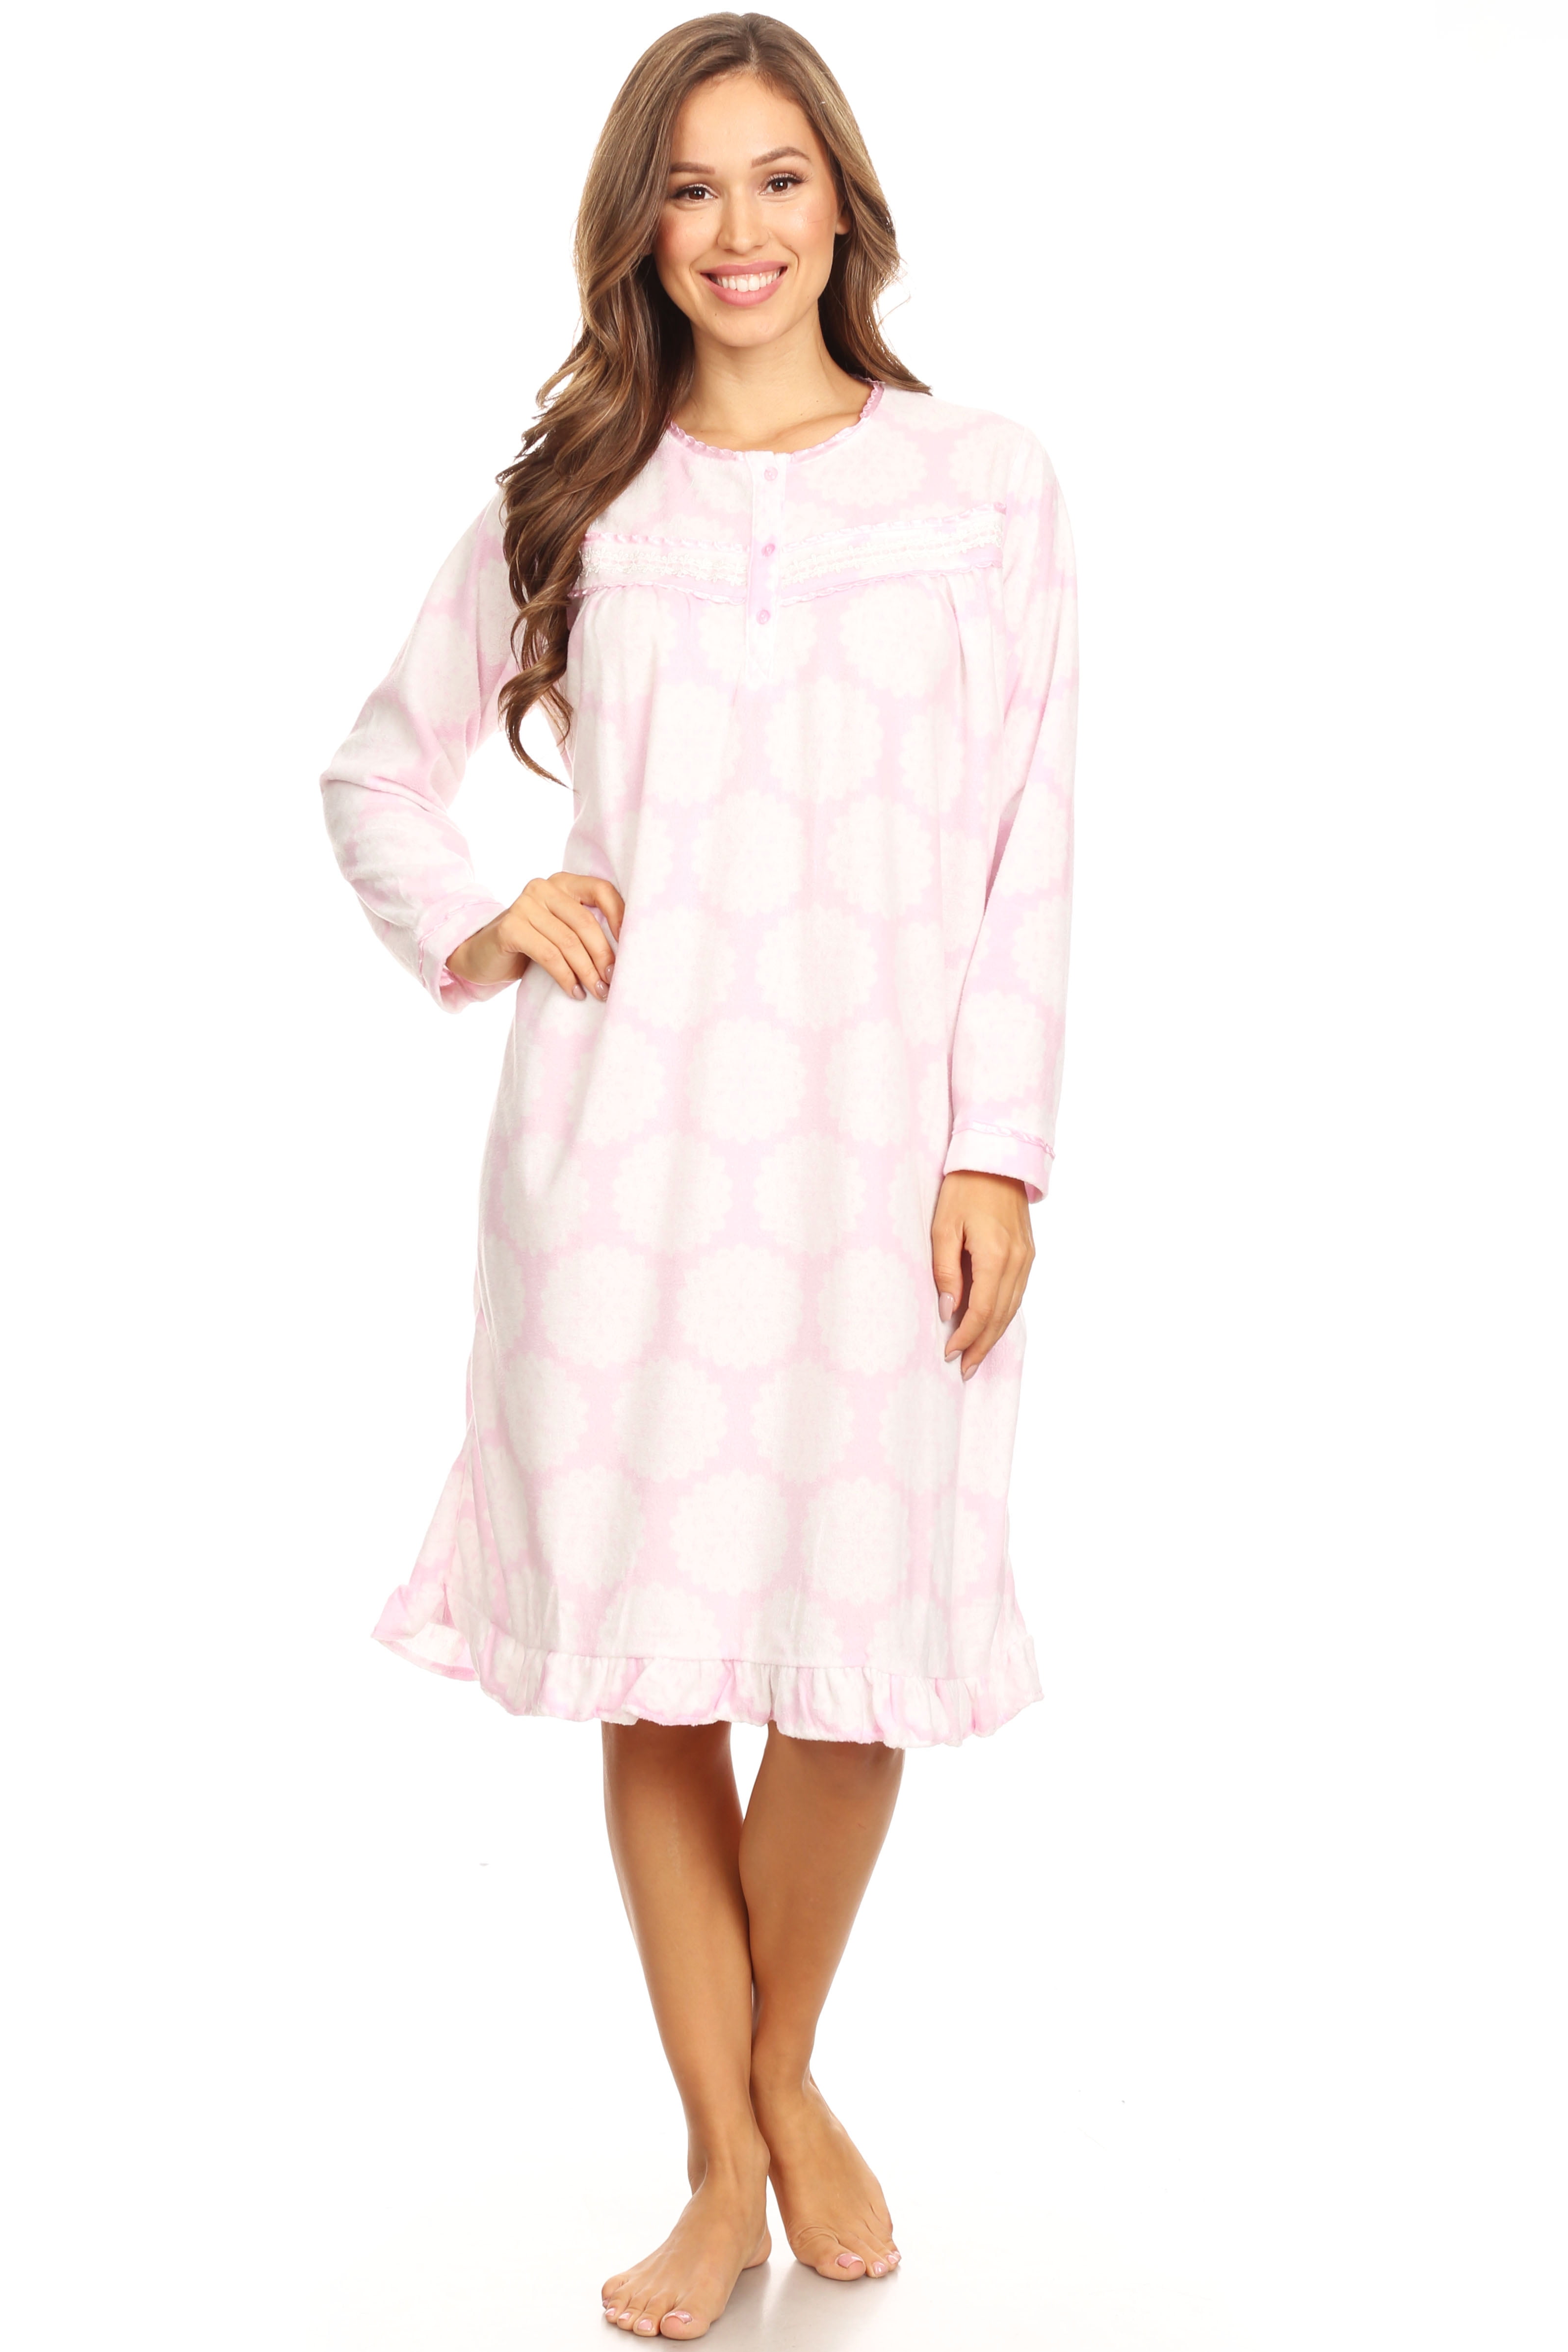 Lati Fashion Fleece Women Nightgown Sleepwear Pajamas Female Long ...